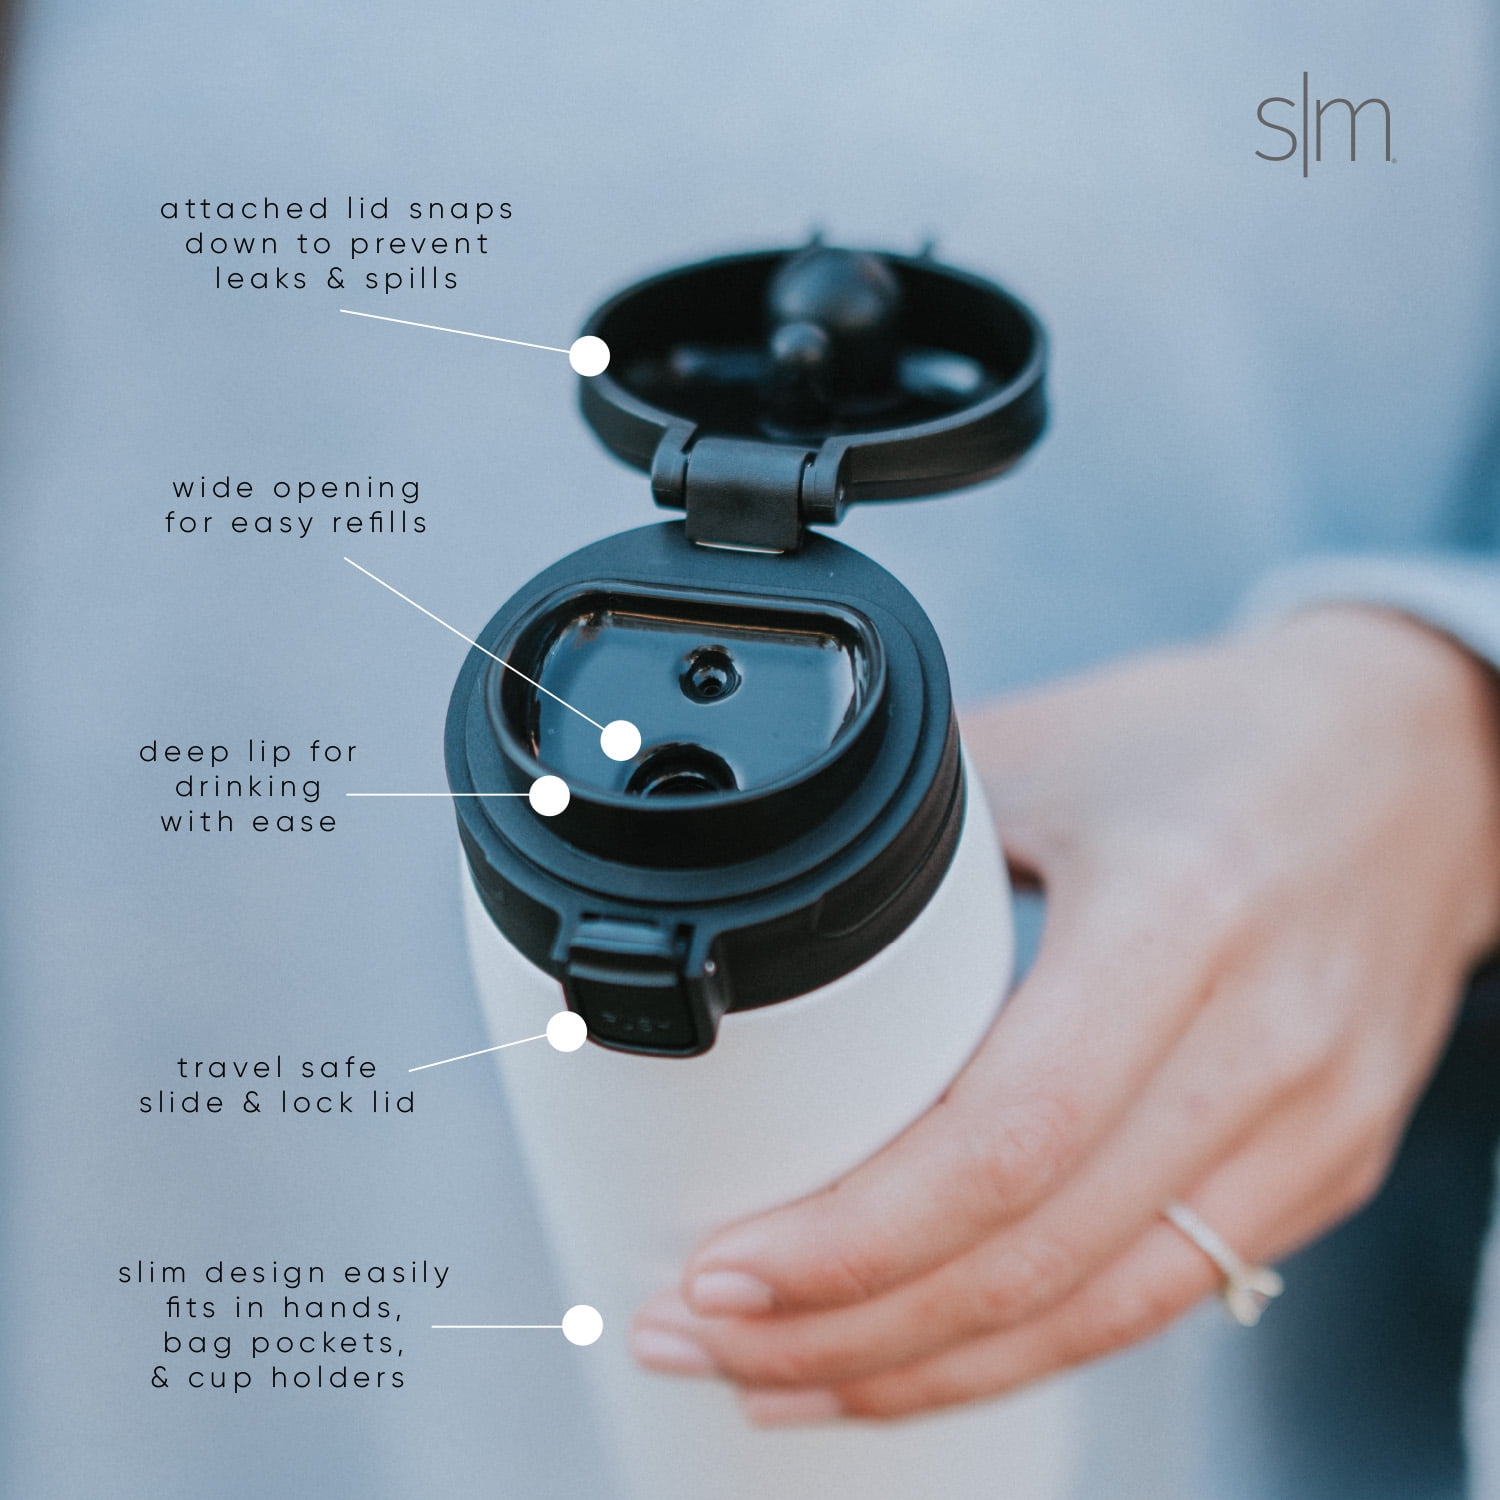 Simple Modern Kona Thermos Insulated Travel Mug - Item #DW3022H